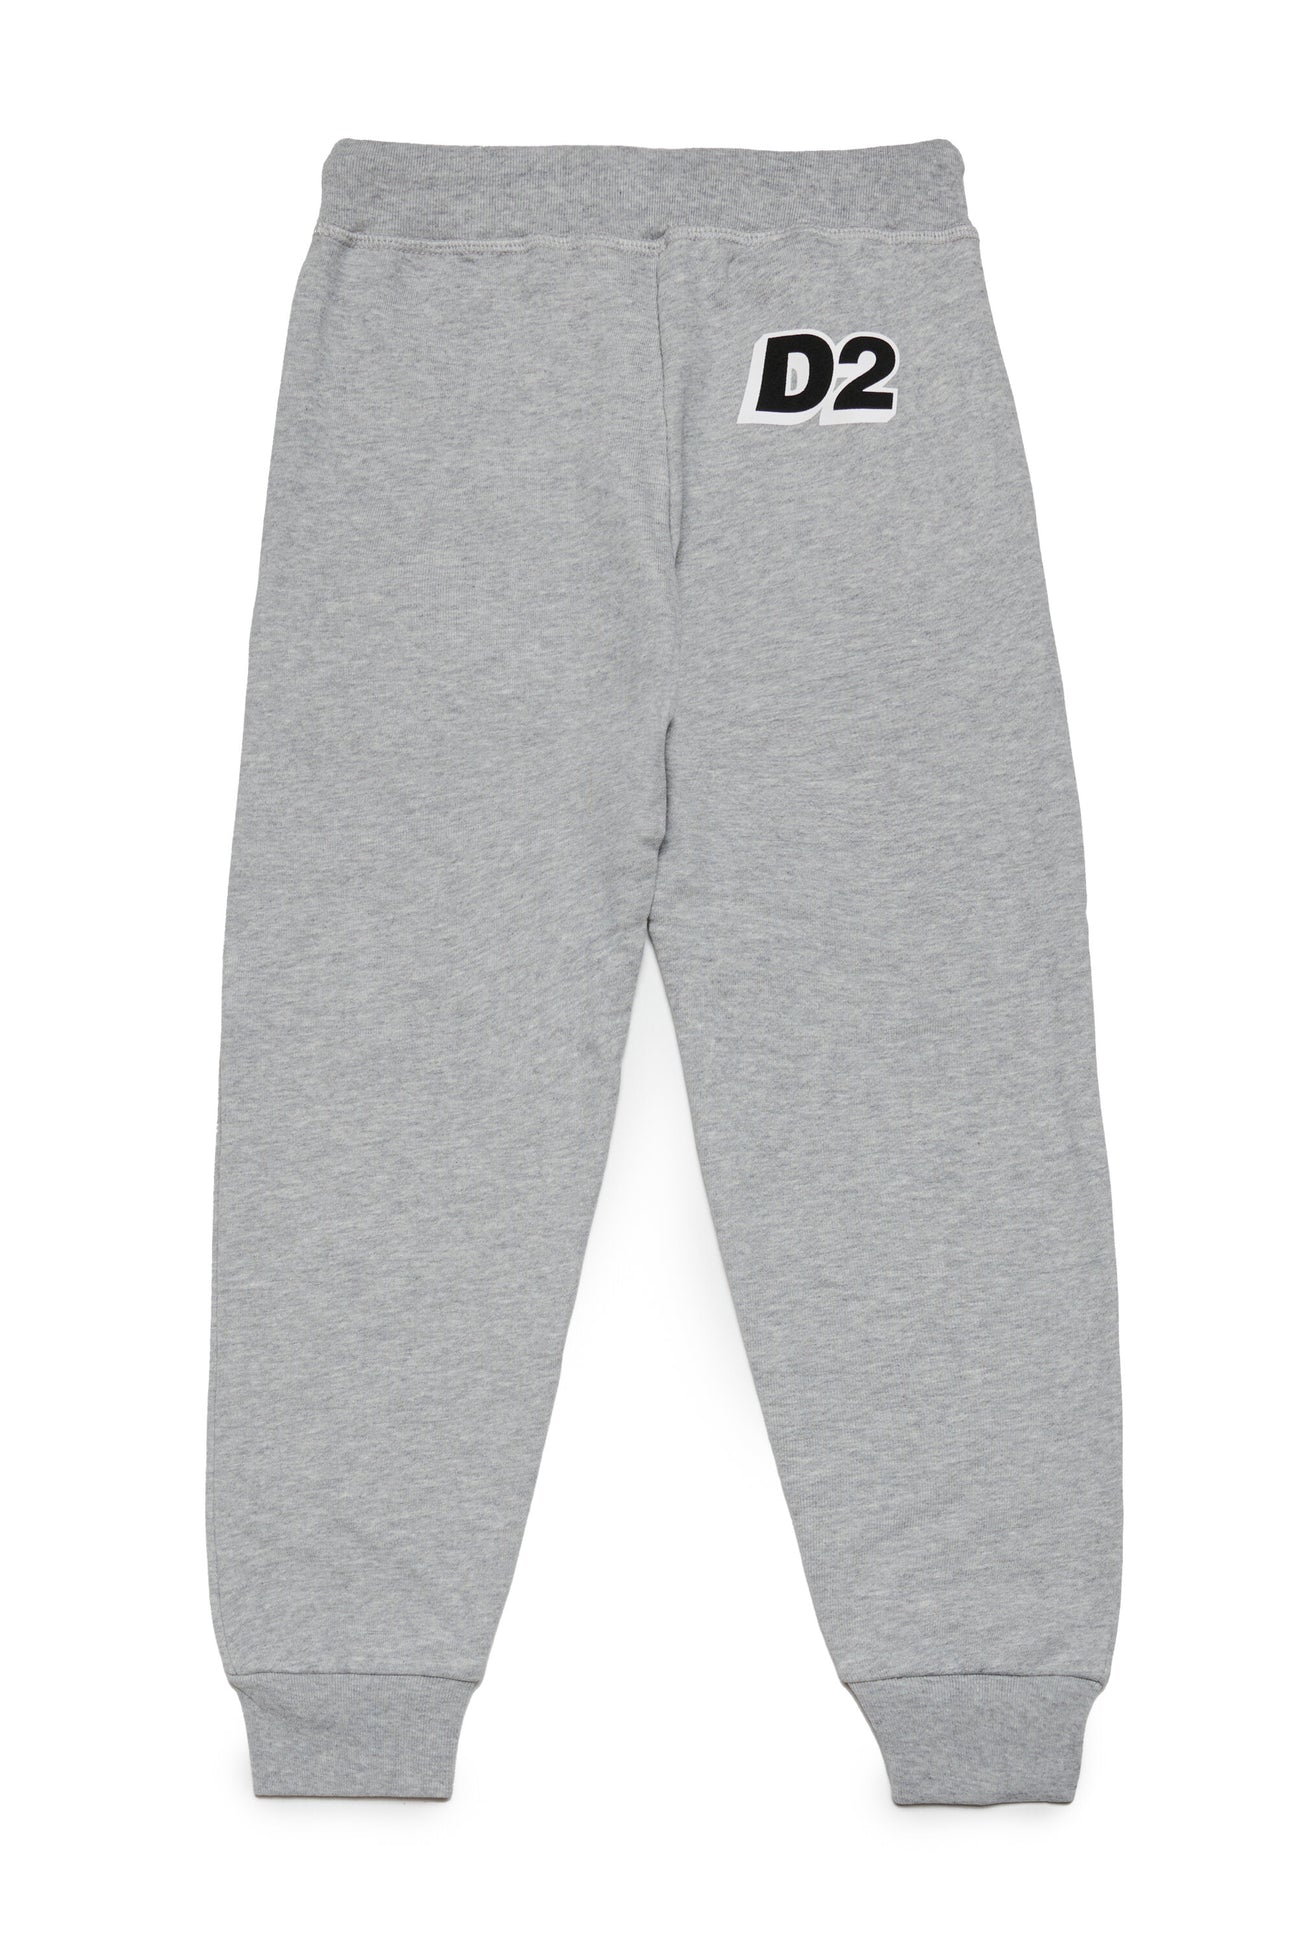 Mélange fleece loungewear pants with D2 logo Mélange fleece loungewear pants with D2 logo